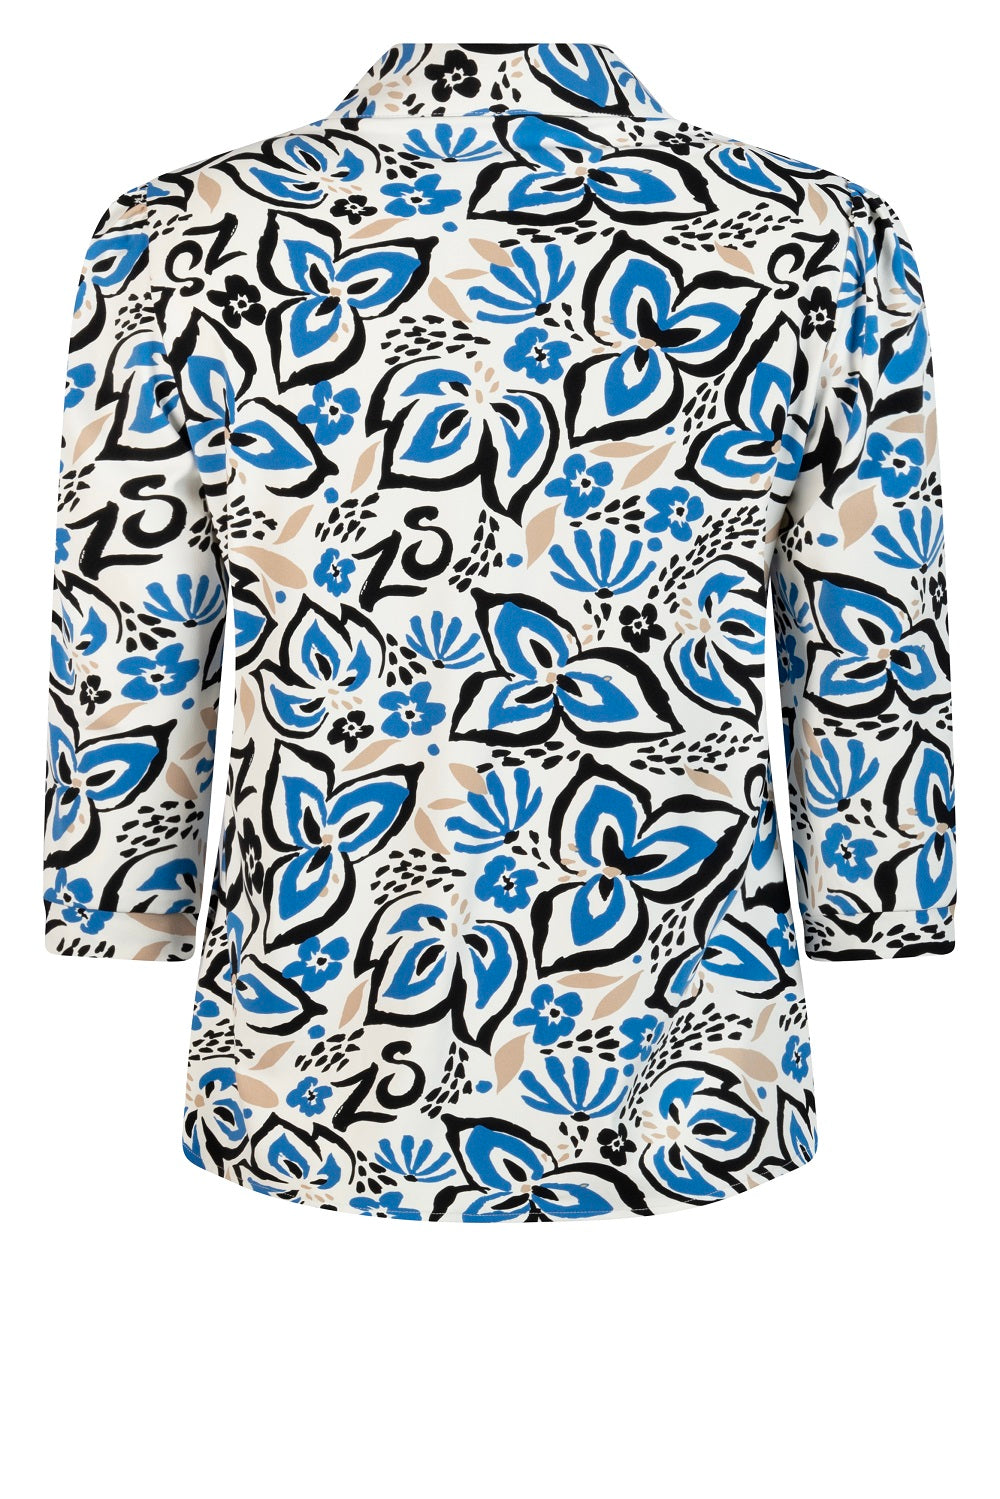 Zoso Print travel blouse 242Francis Strong Blue/Black